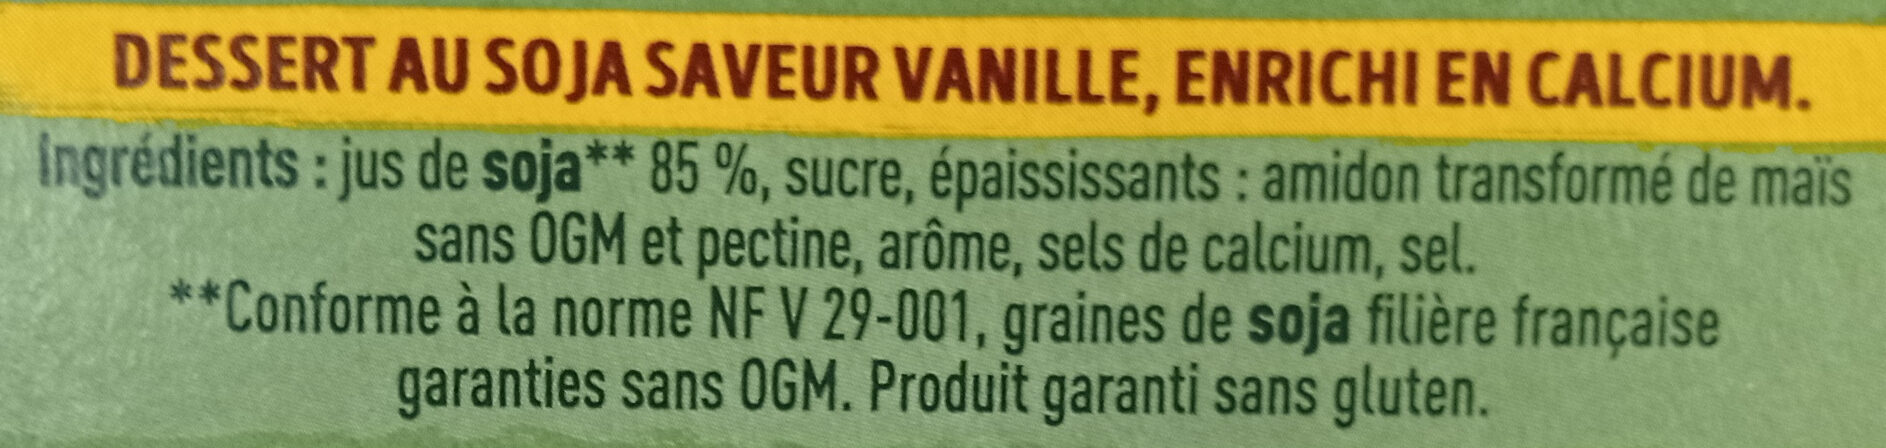 DESSERT VEGETAL saveur vanille - Ingredients - fr